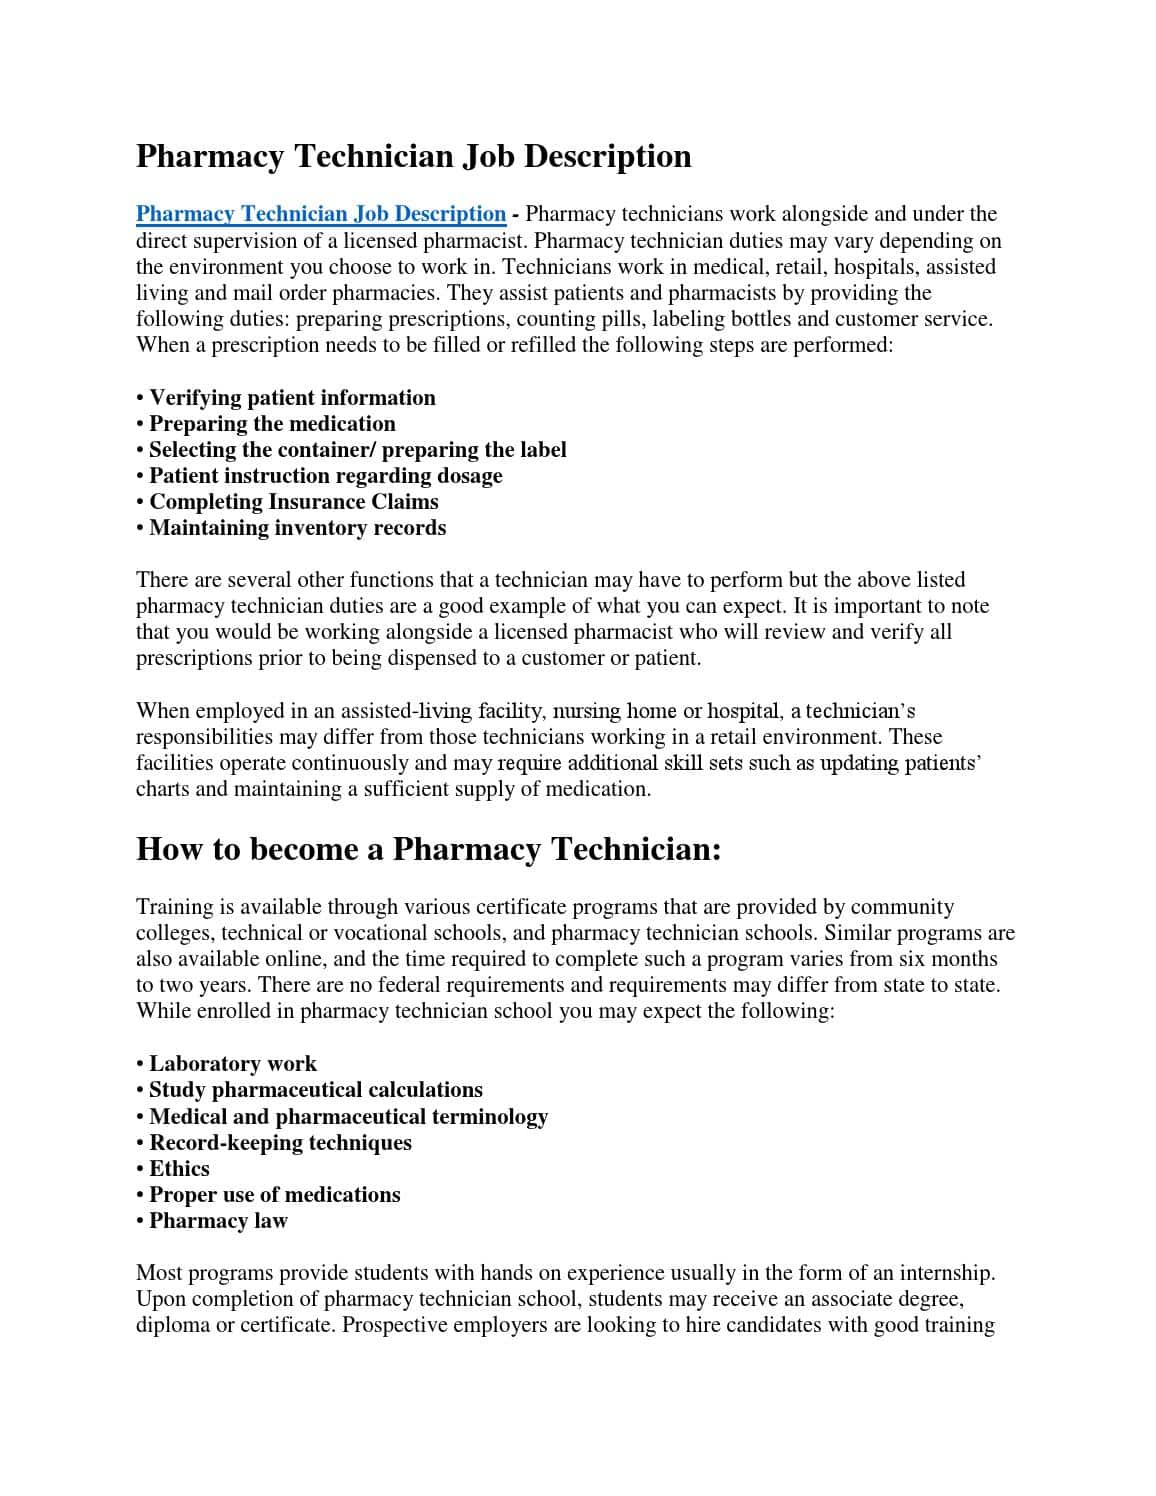 pharmacy-technician-job-responsibilities